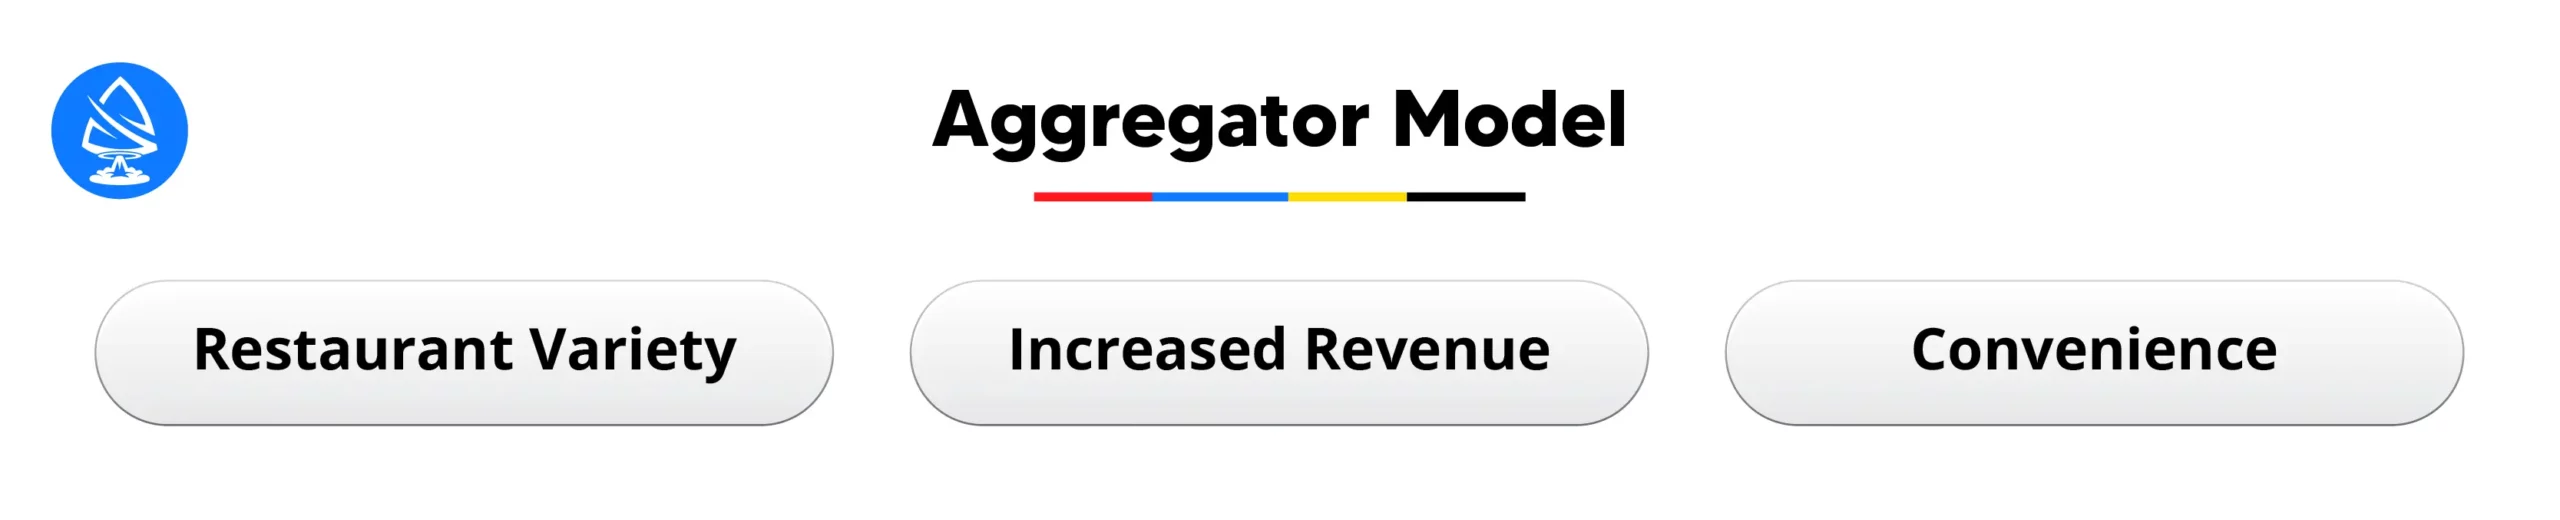 Aggregator Model